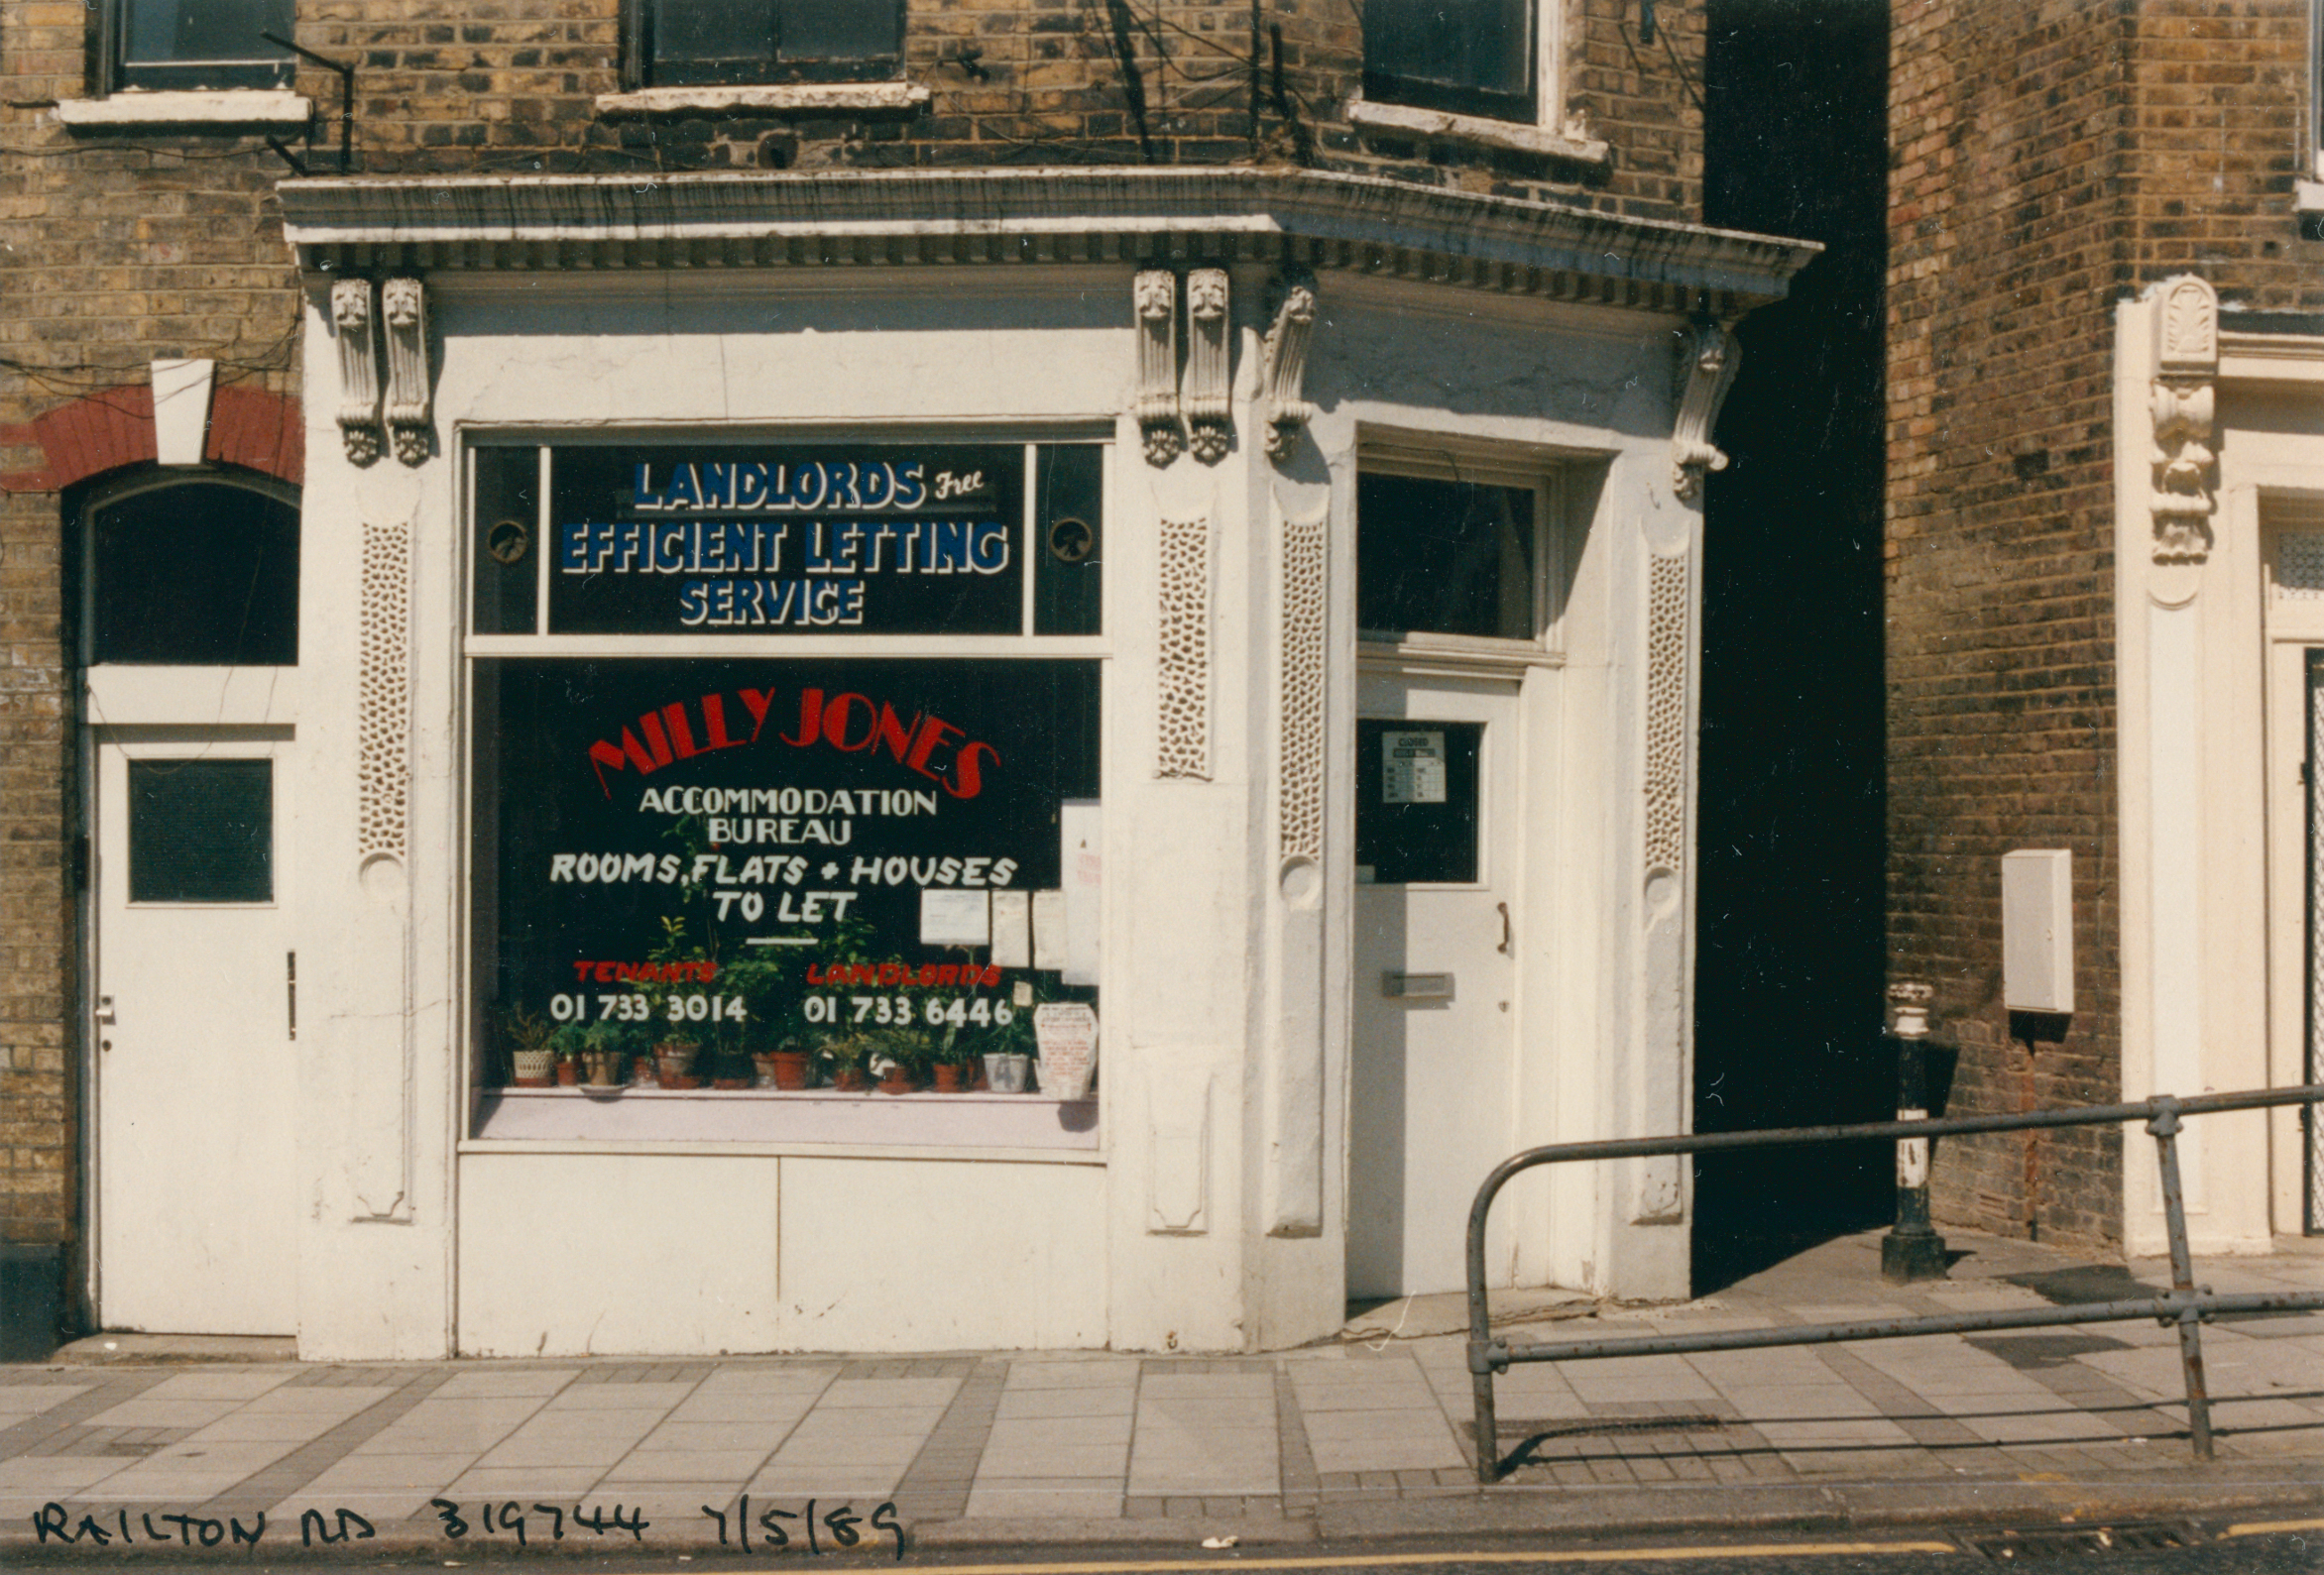 Letting Service, Railton Rd, Brixton, 1989